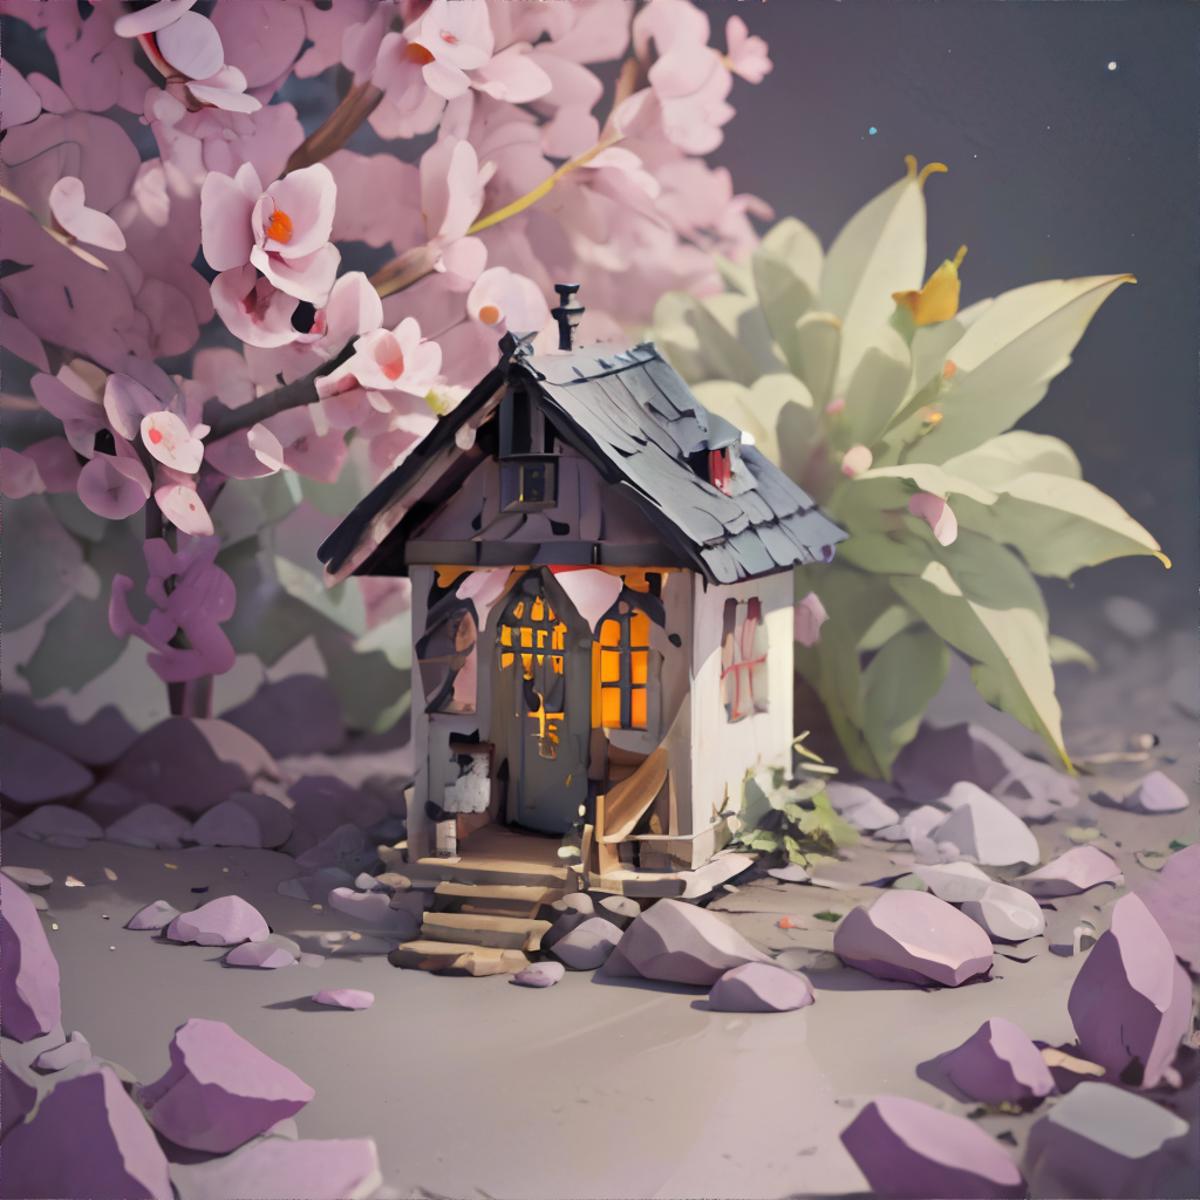 LITTLE HOUSE image by bzlibby